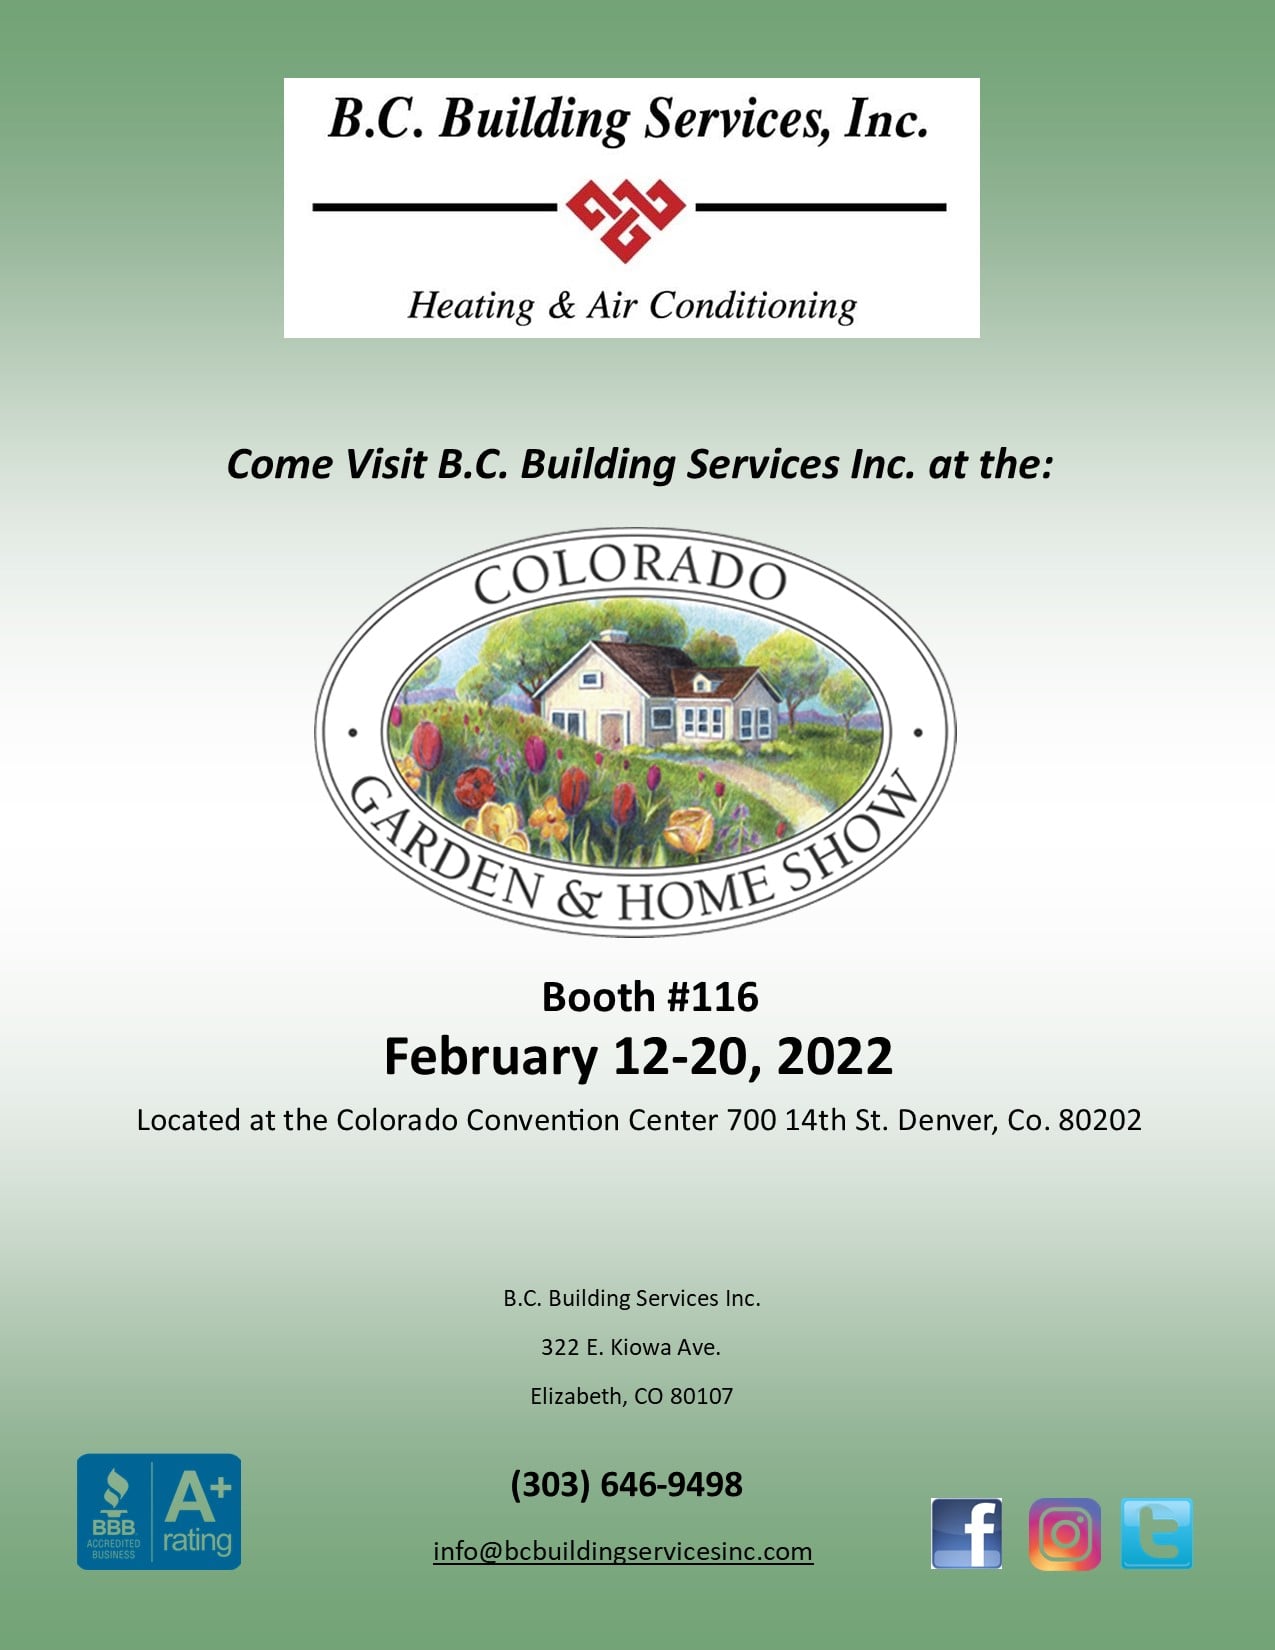 B.C. Building Services Inc. 322 E Kiowa Ave, Elizabeth Colorado 80107